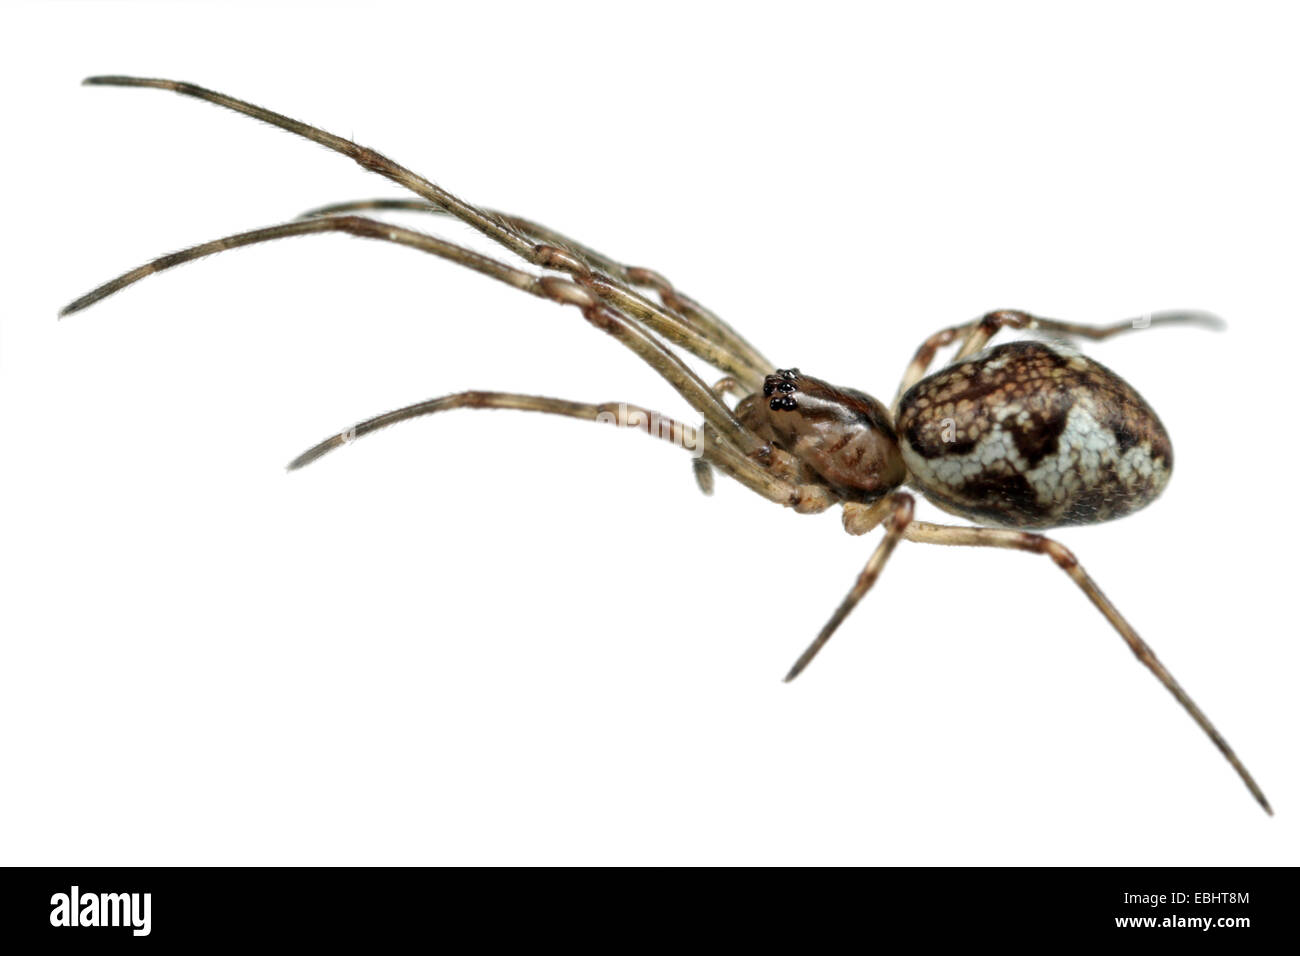 Hembra spider Tetragnatha obtusa sobre fondo blanco. Familia Tetragnathidae, larga plana tejedores de Orb. Foto de stock